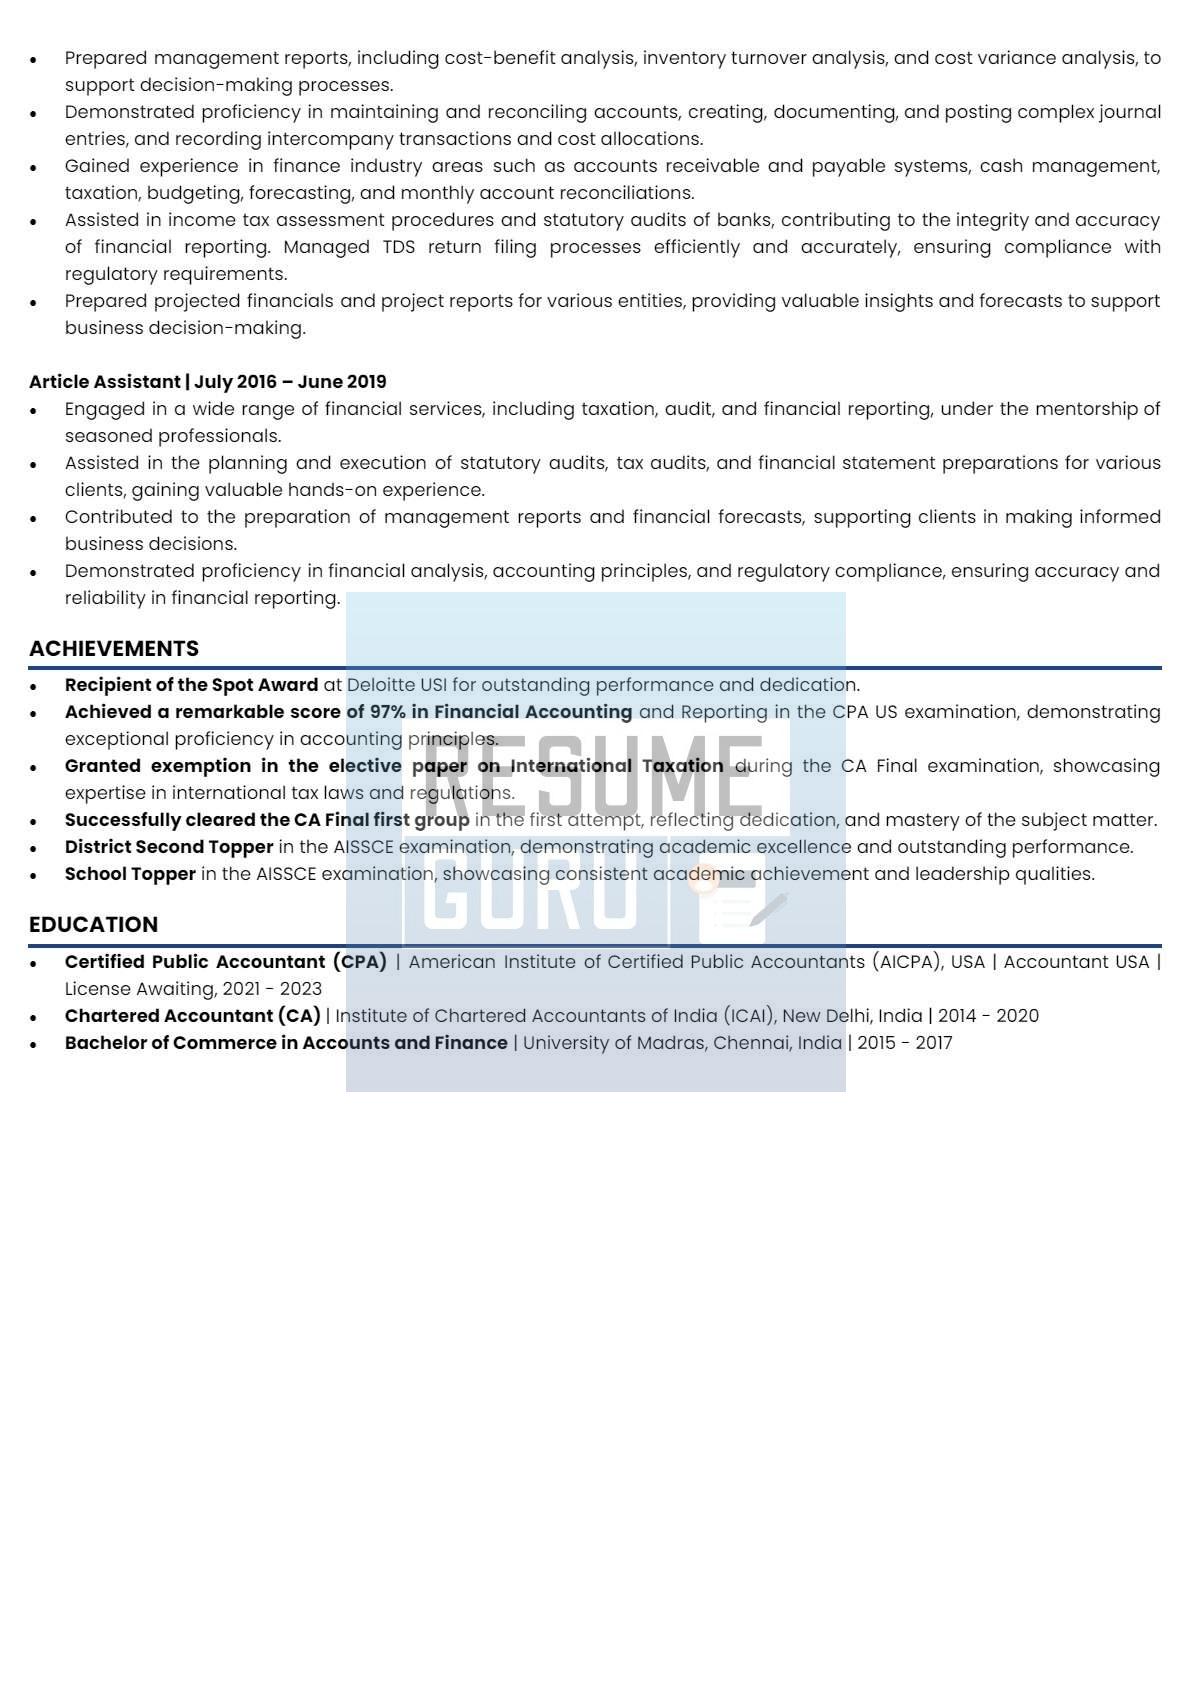 Mid-Level Finance and Audit Resume Sample_2